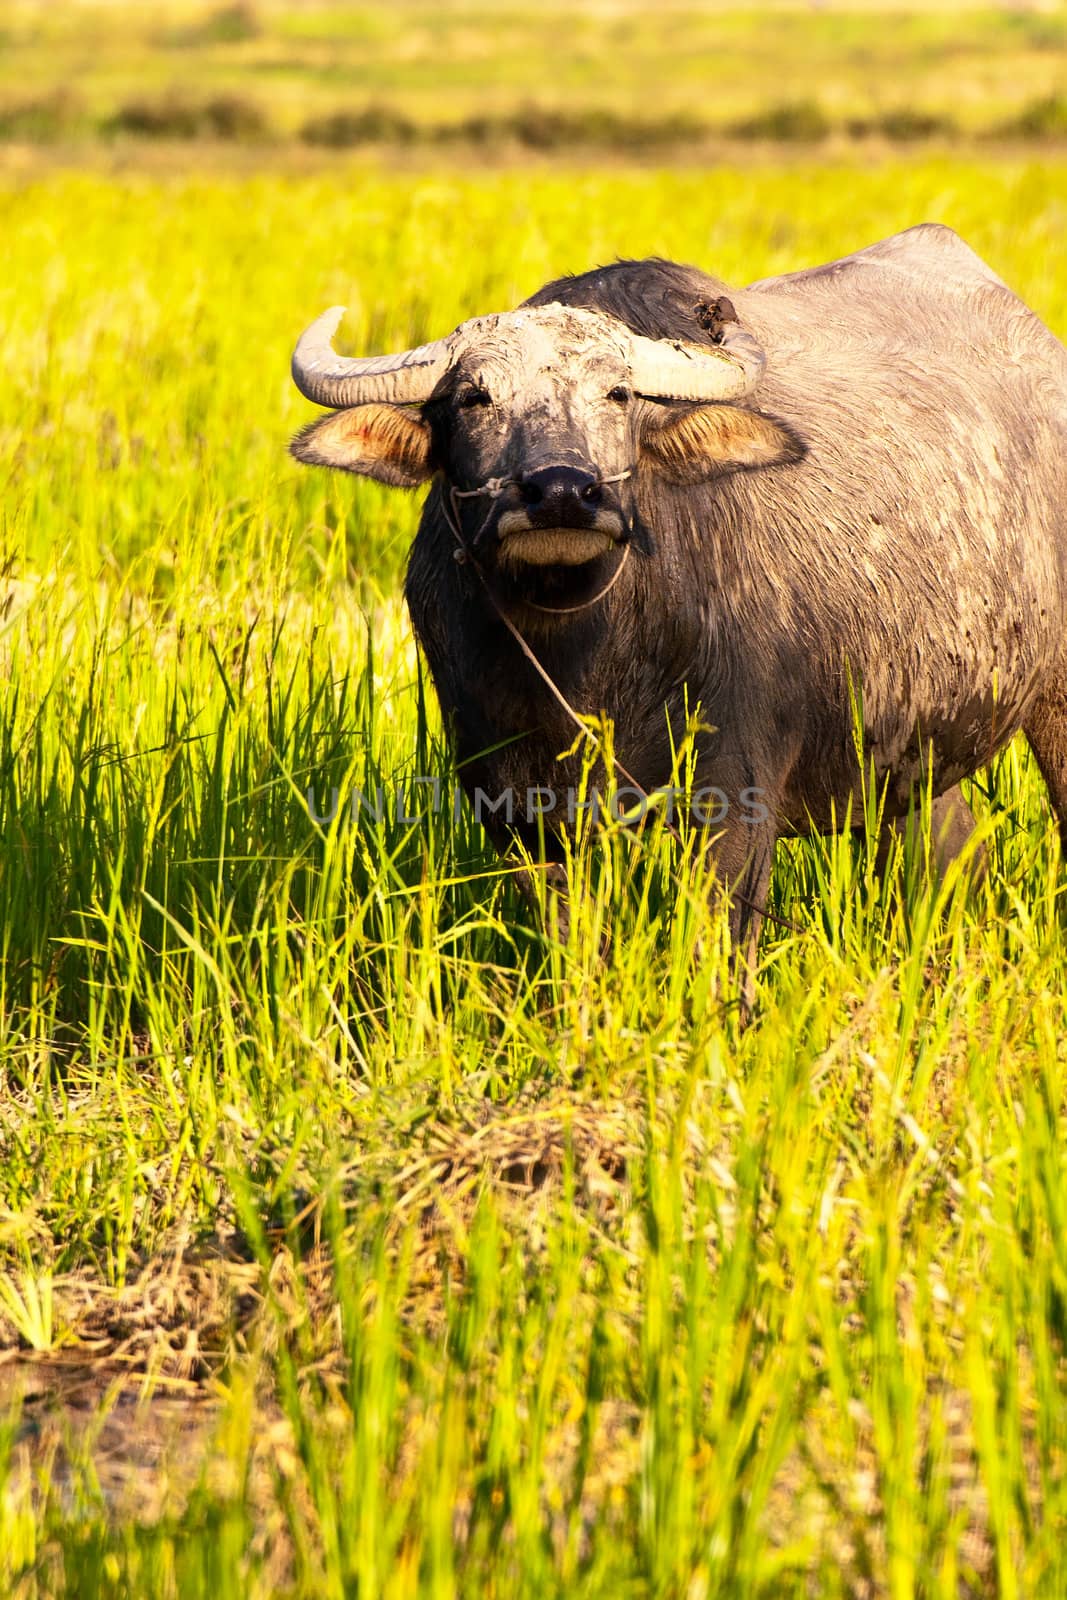 Thai buffalo in grass field by Yuri2012